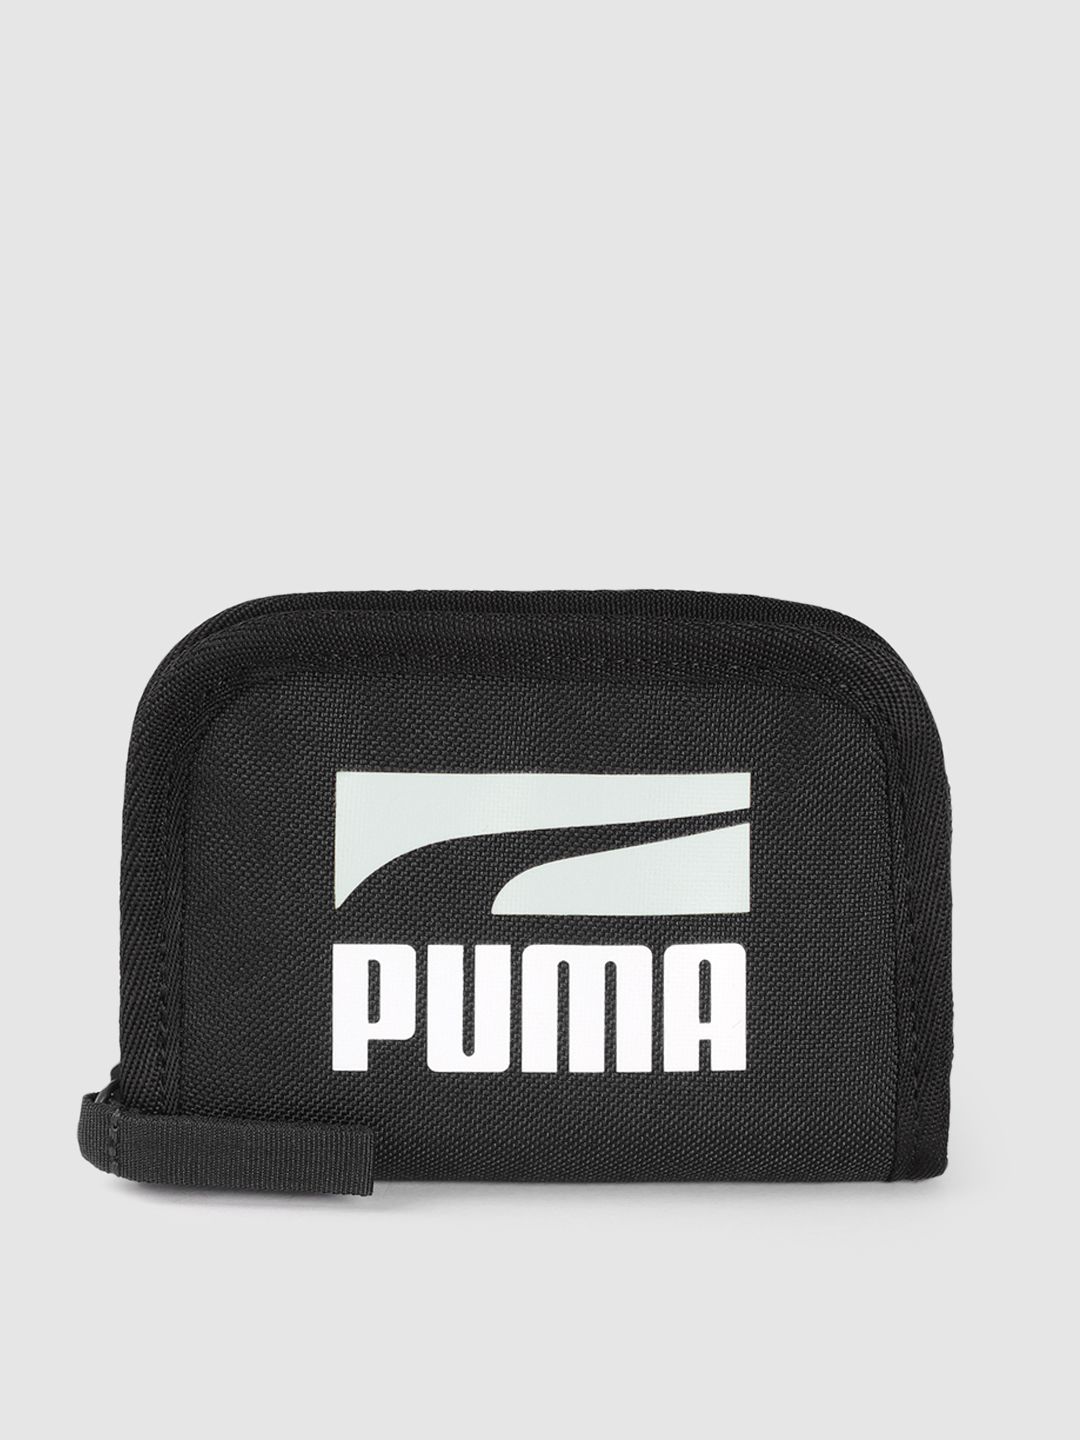 Puma Unisex Black Printed Zip Around Wallet Price in India